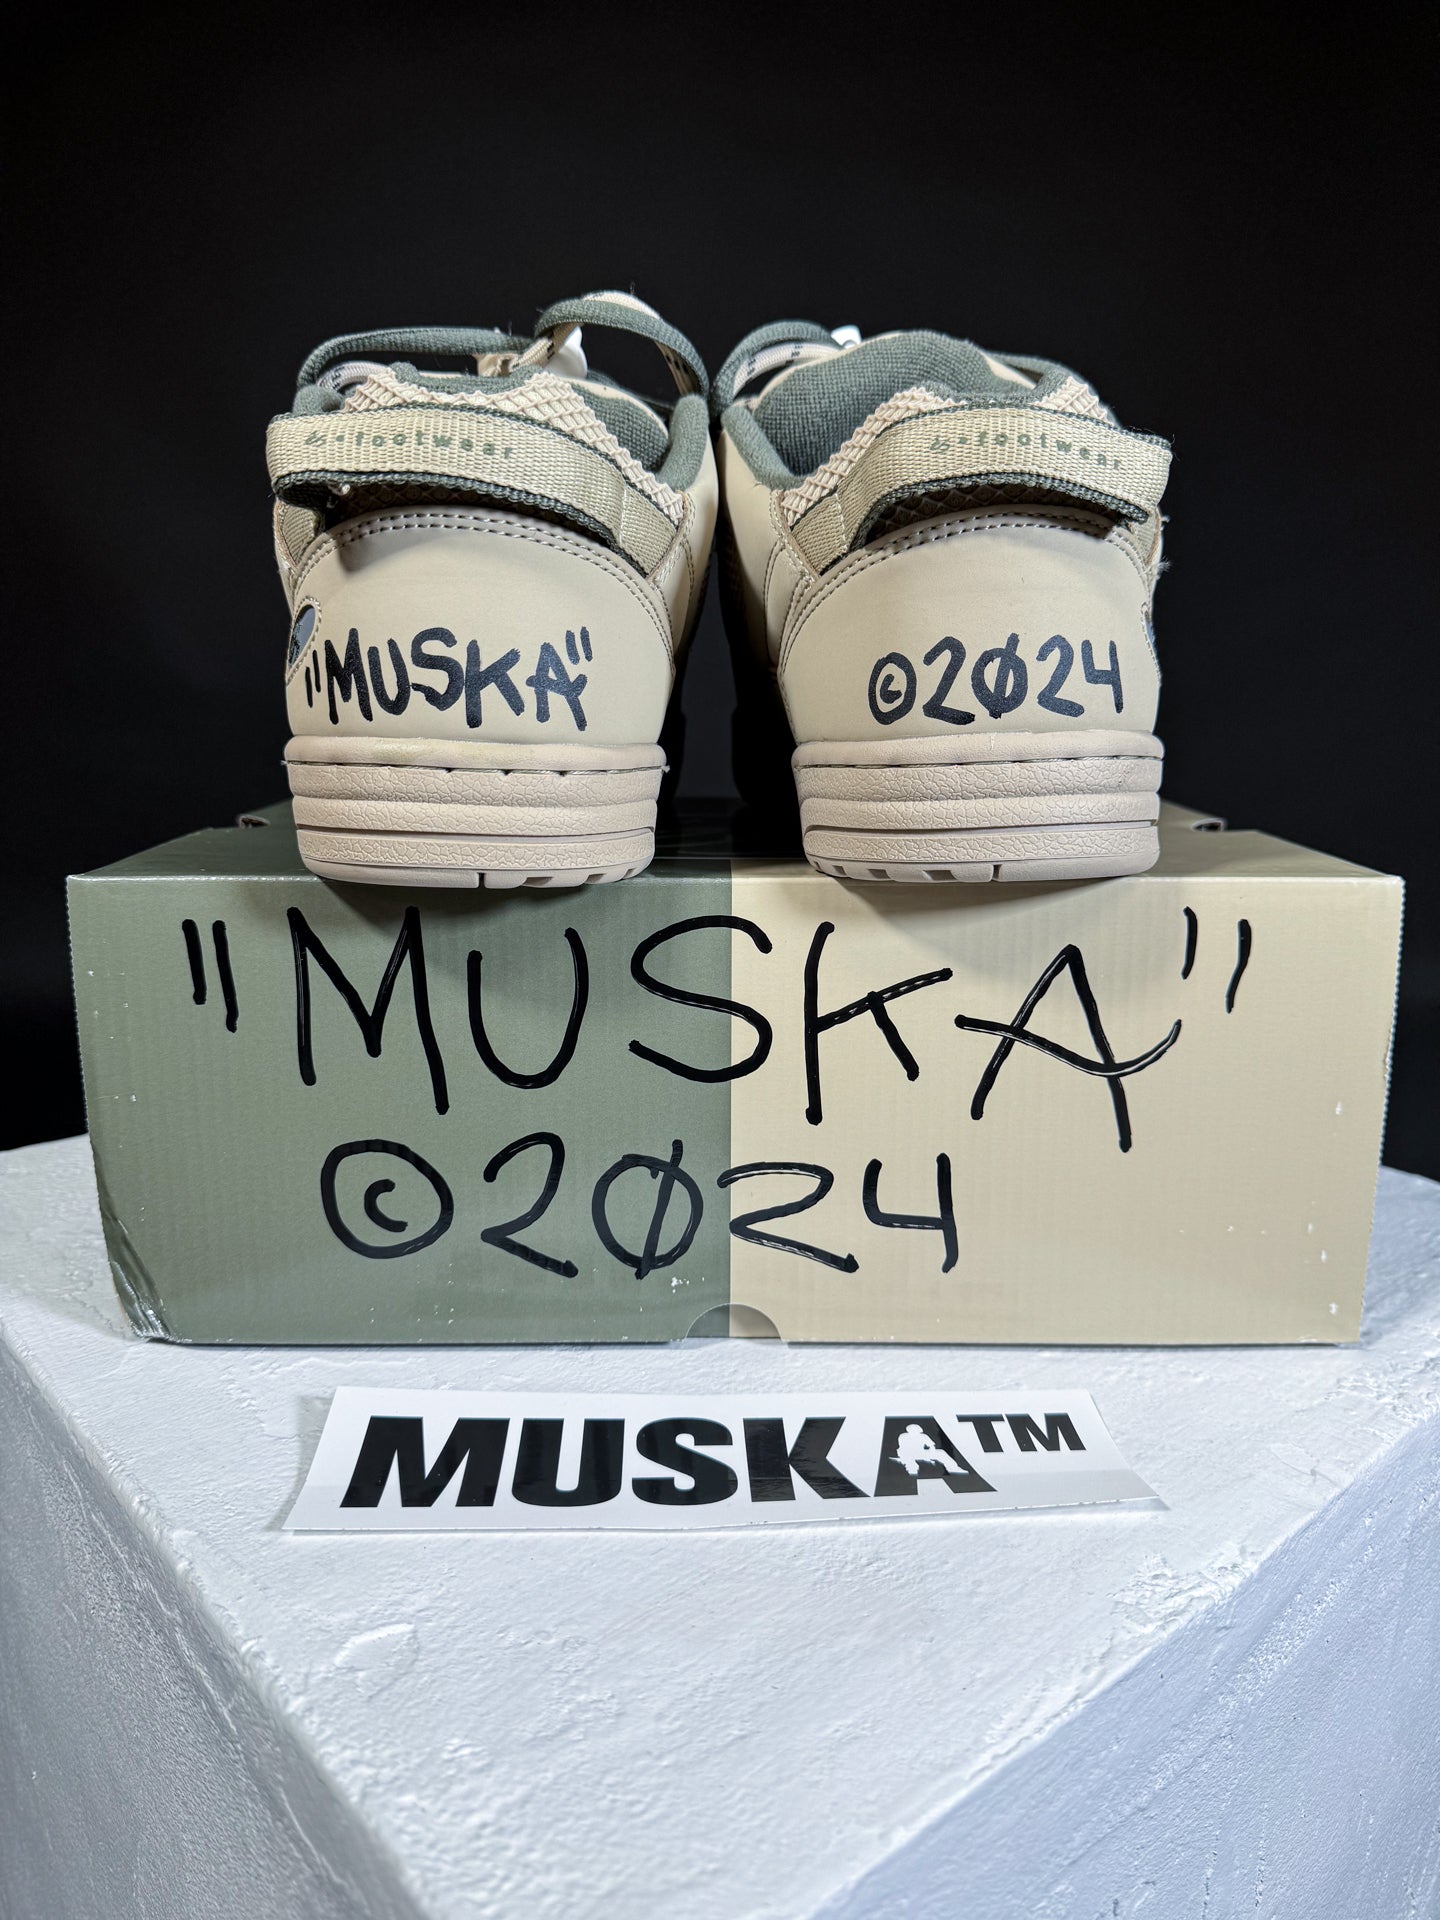 MUSKA x ES - TAN / OLIVE - SIGNED* (WHITE CORD  LOCK)